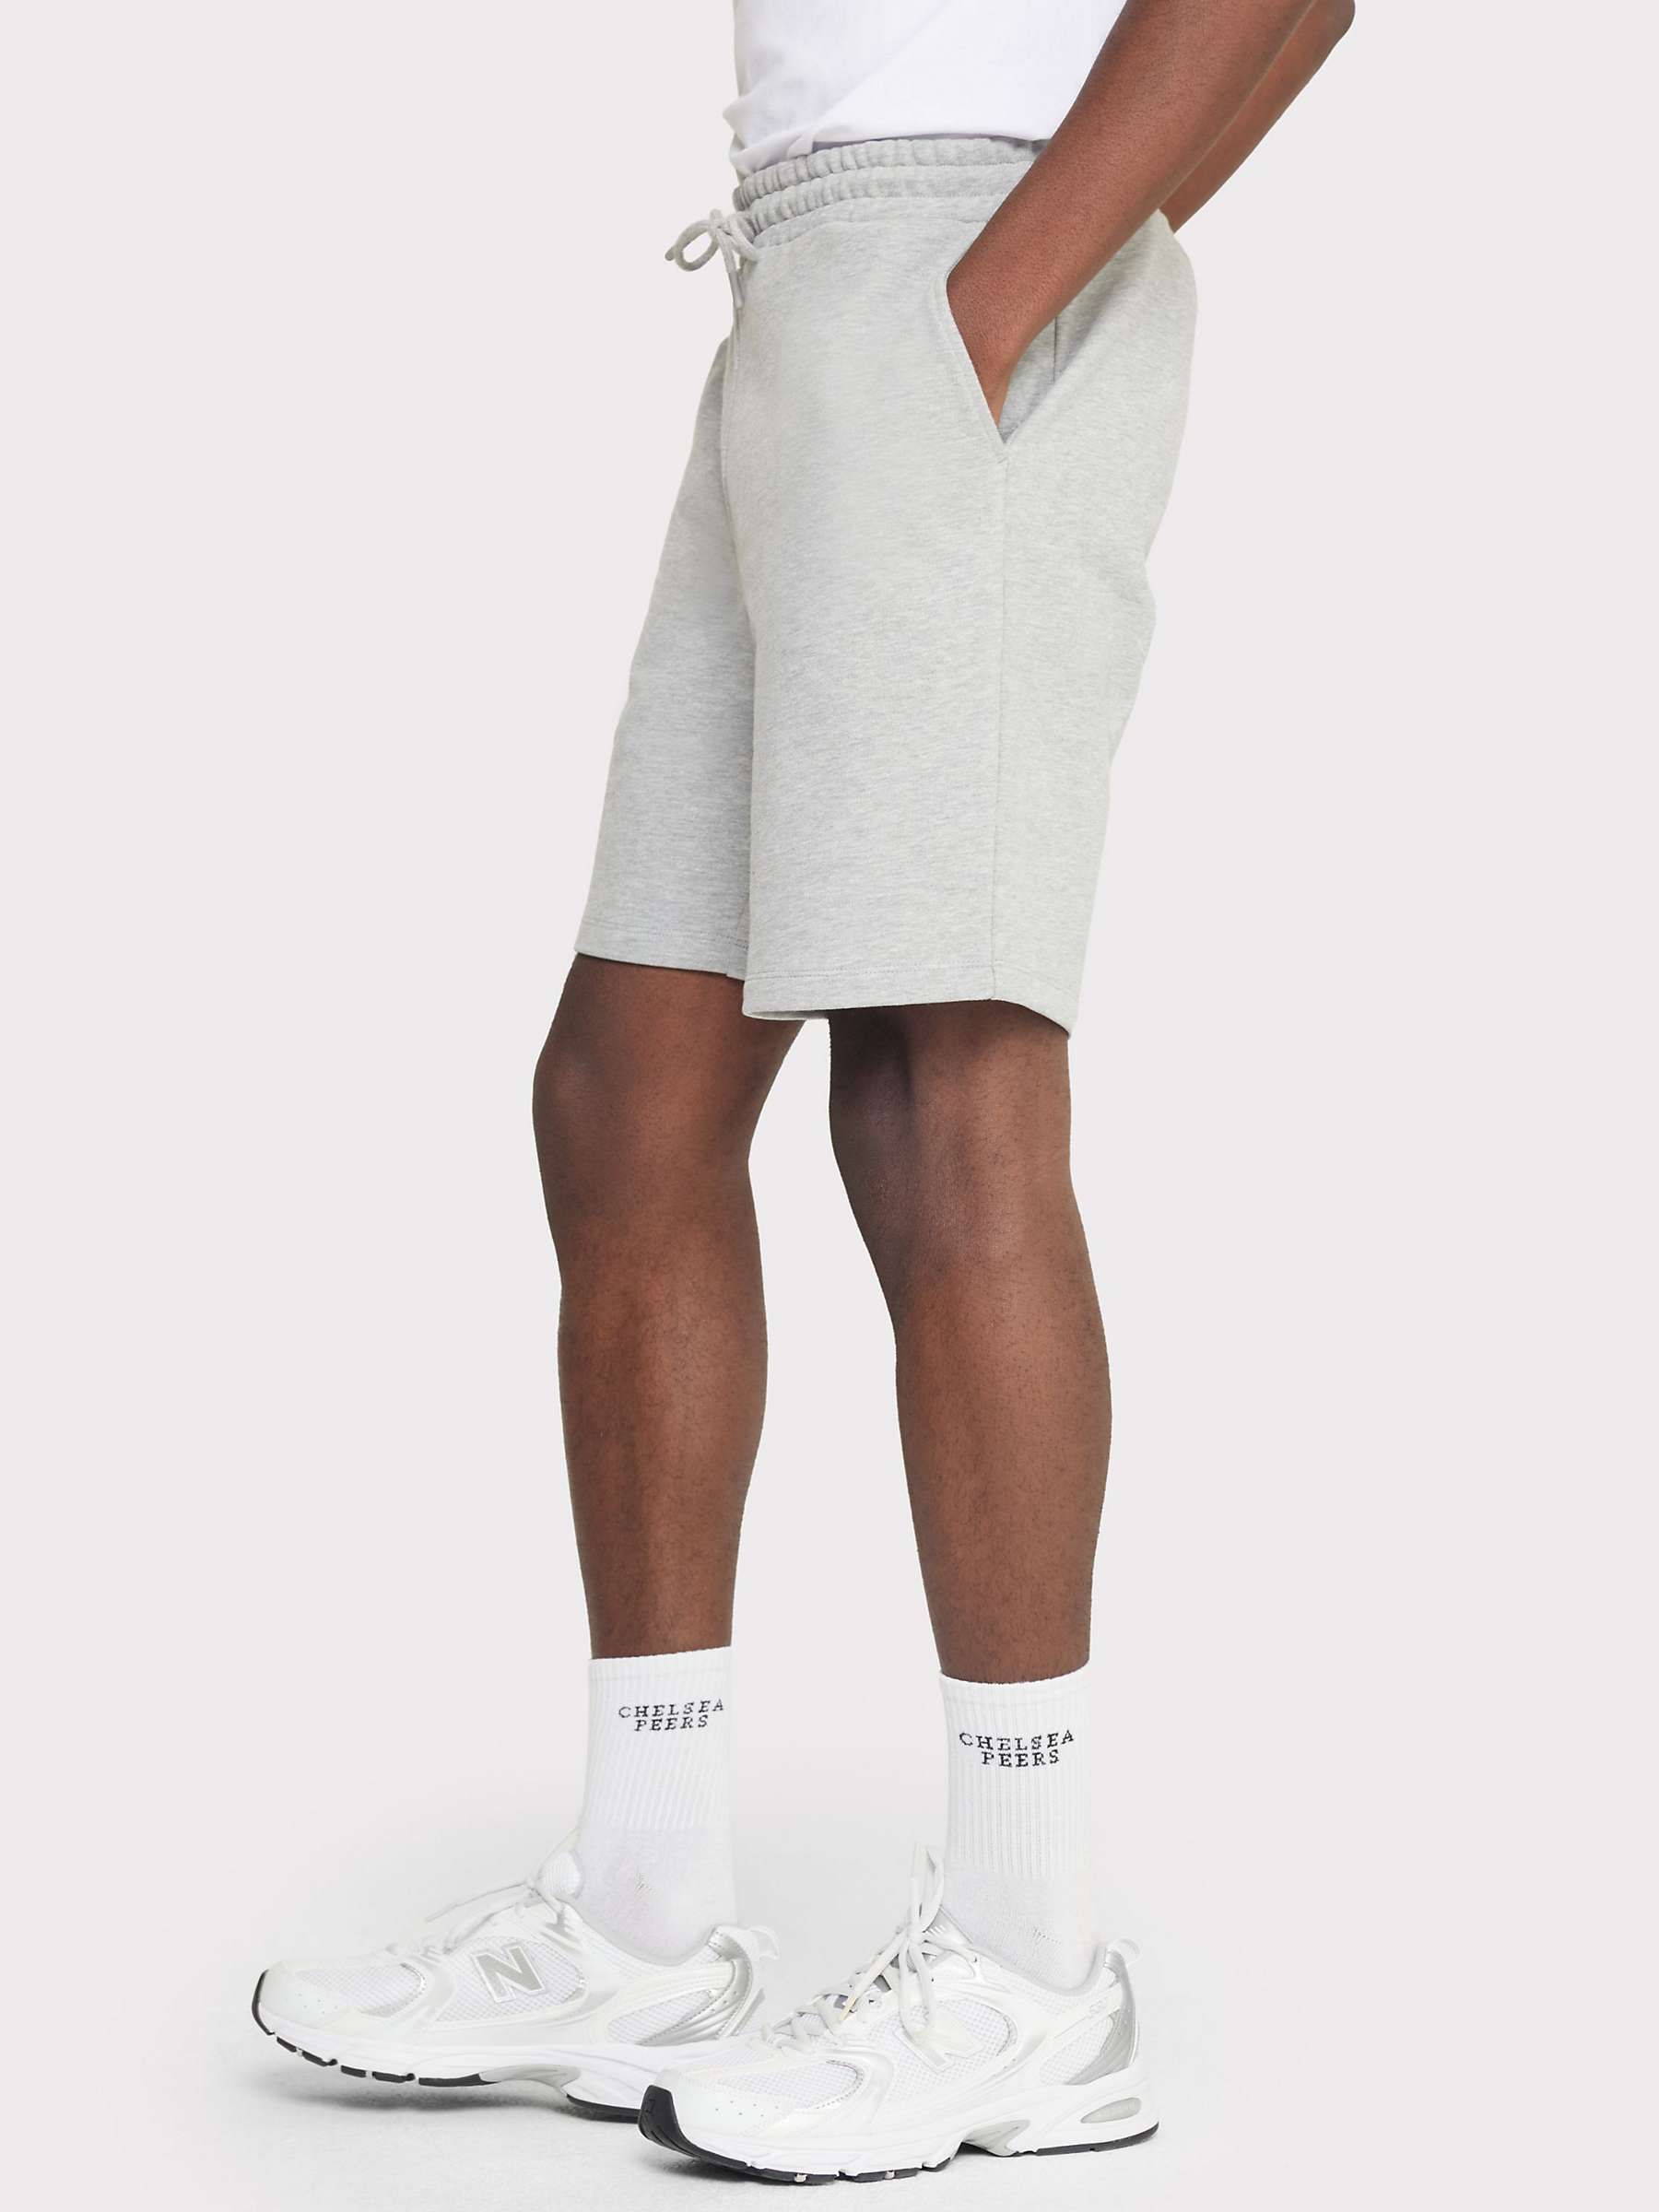 Buy Chelsea Peers Organic Cotton Blend Sweat Shorts, Grey Online at johnlewis.com